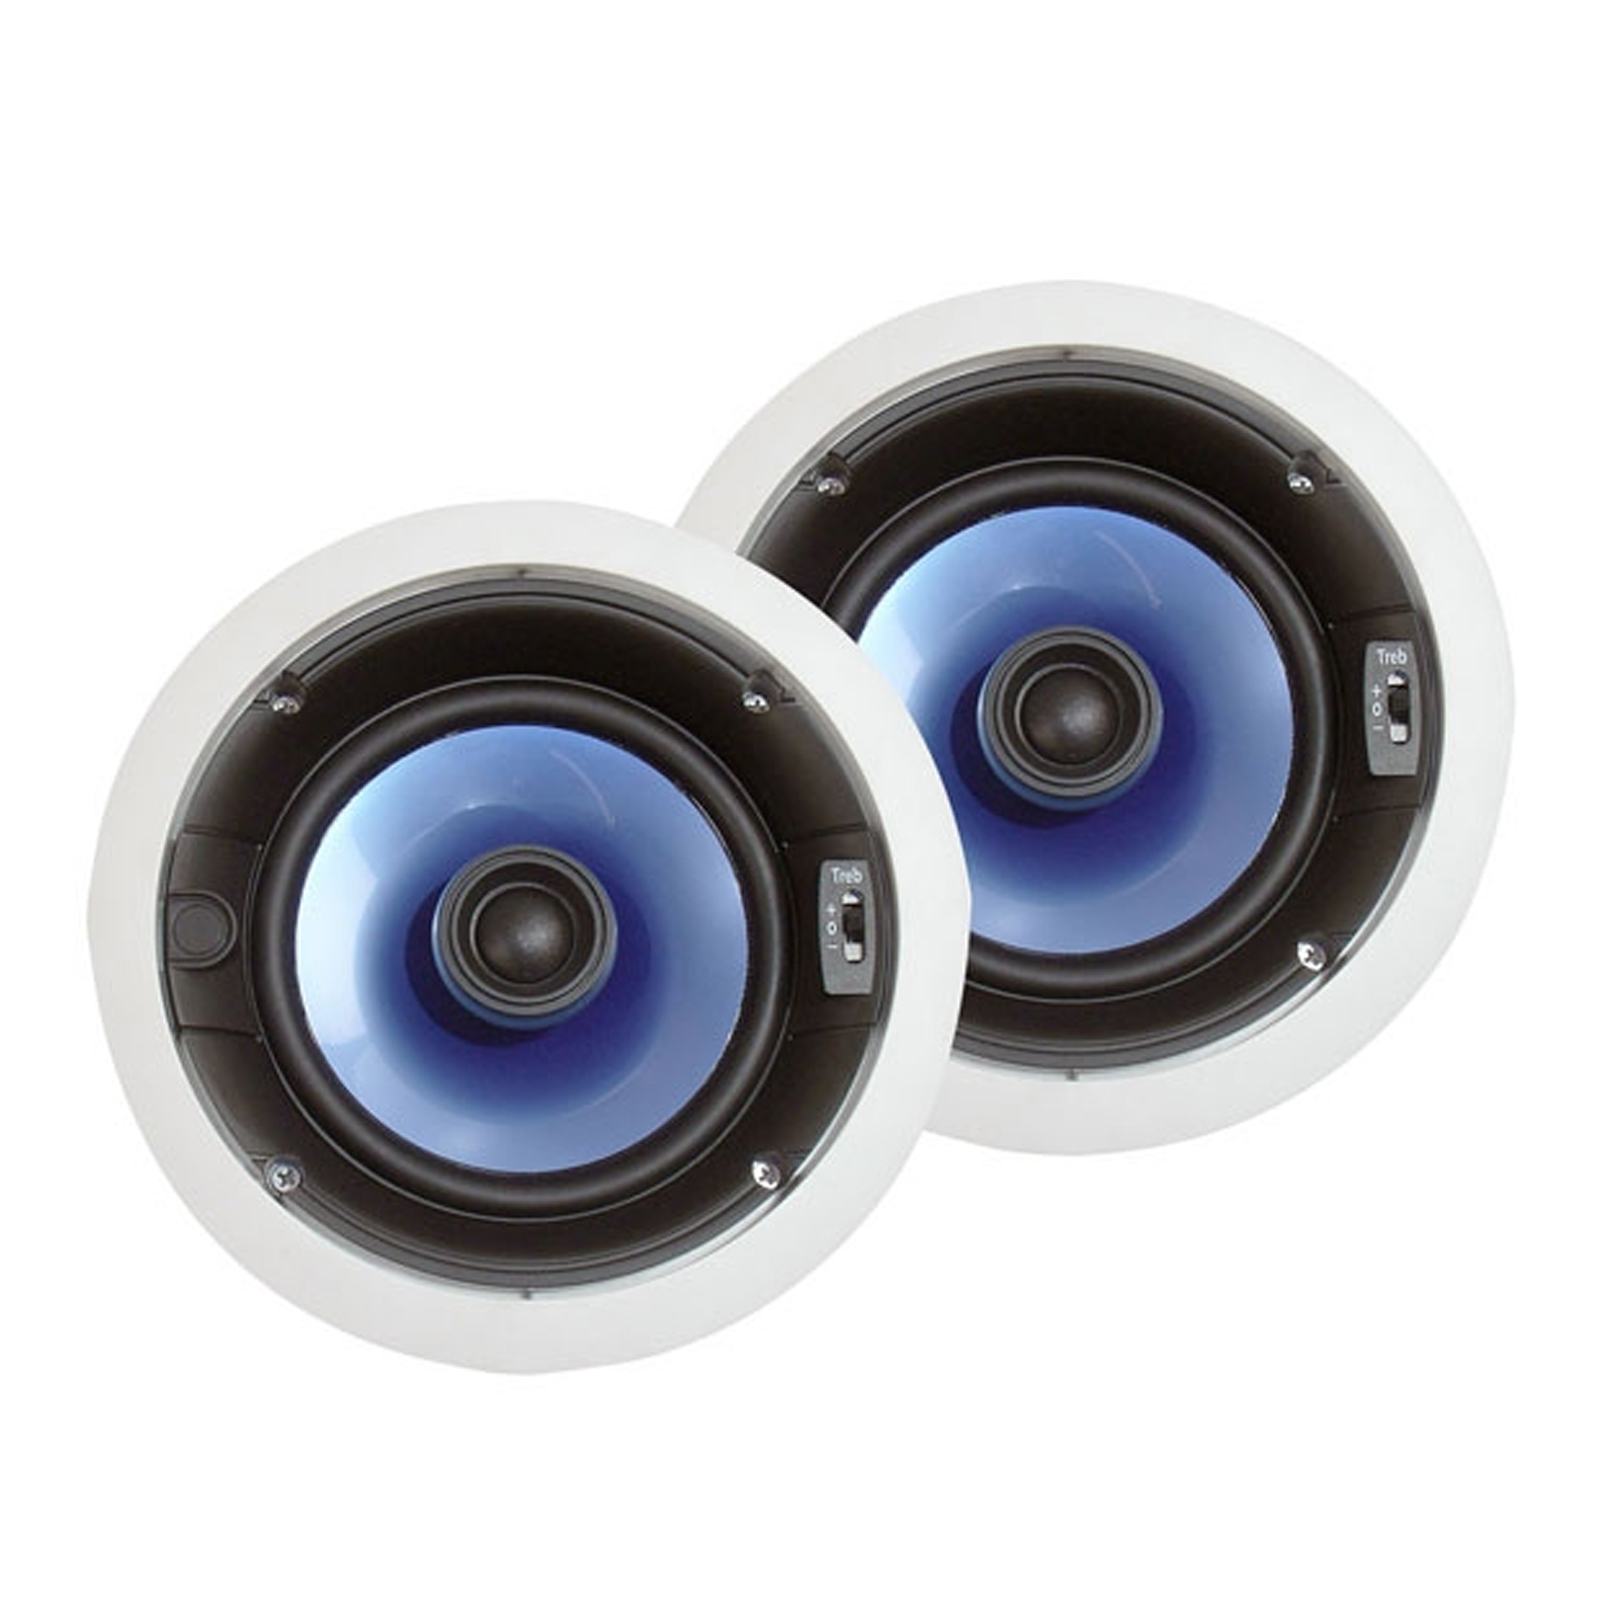 Pyle 250 Watt 6.5" Two-Way In-ceiling Speaker System w/Adjustable Treble Control - image 1 of 1